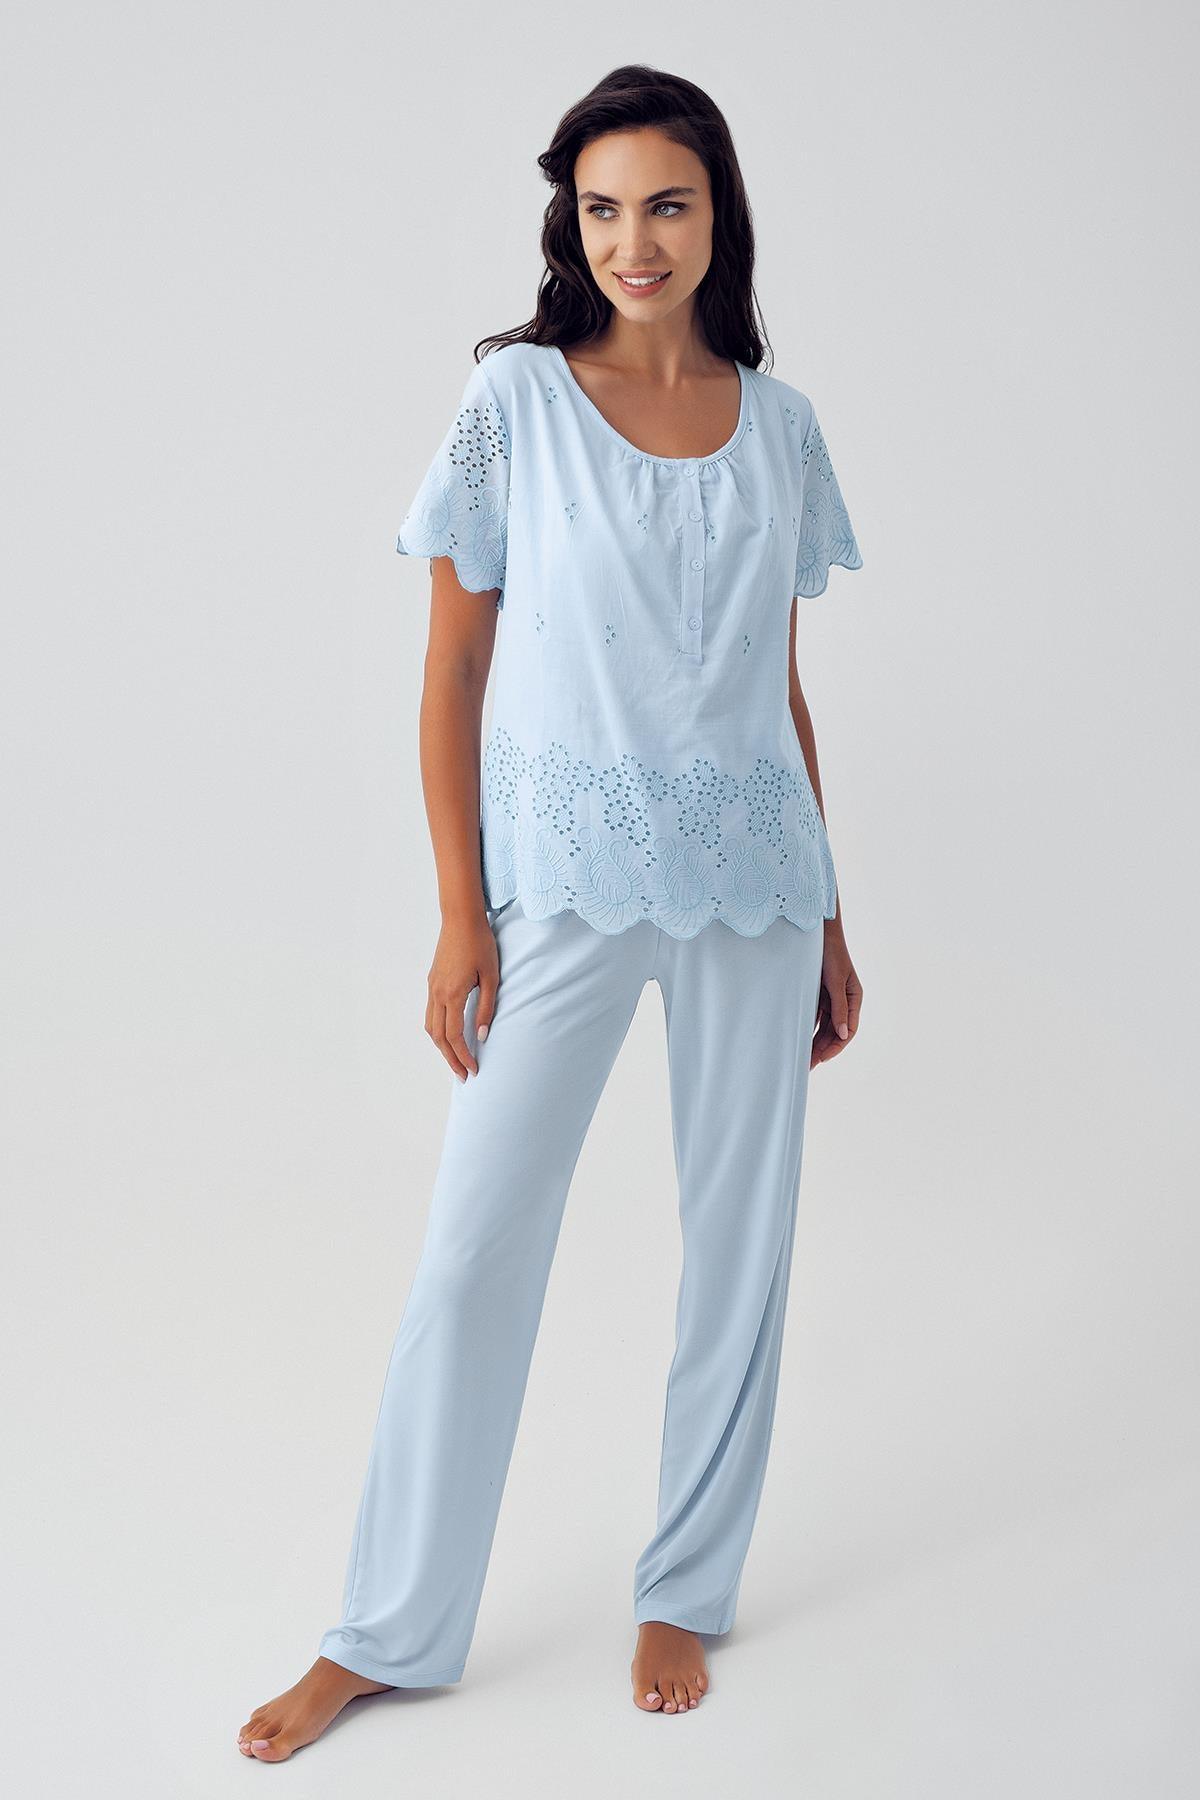 Artış Mavi Pamuklu Vual Pijama Takım-10215 - Artış Collection